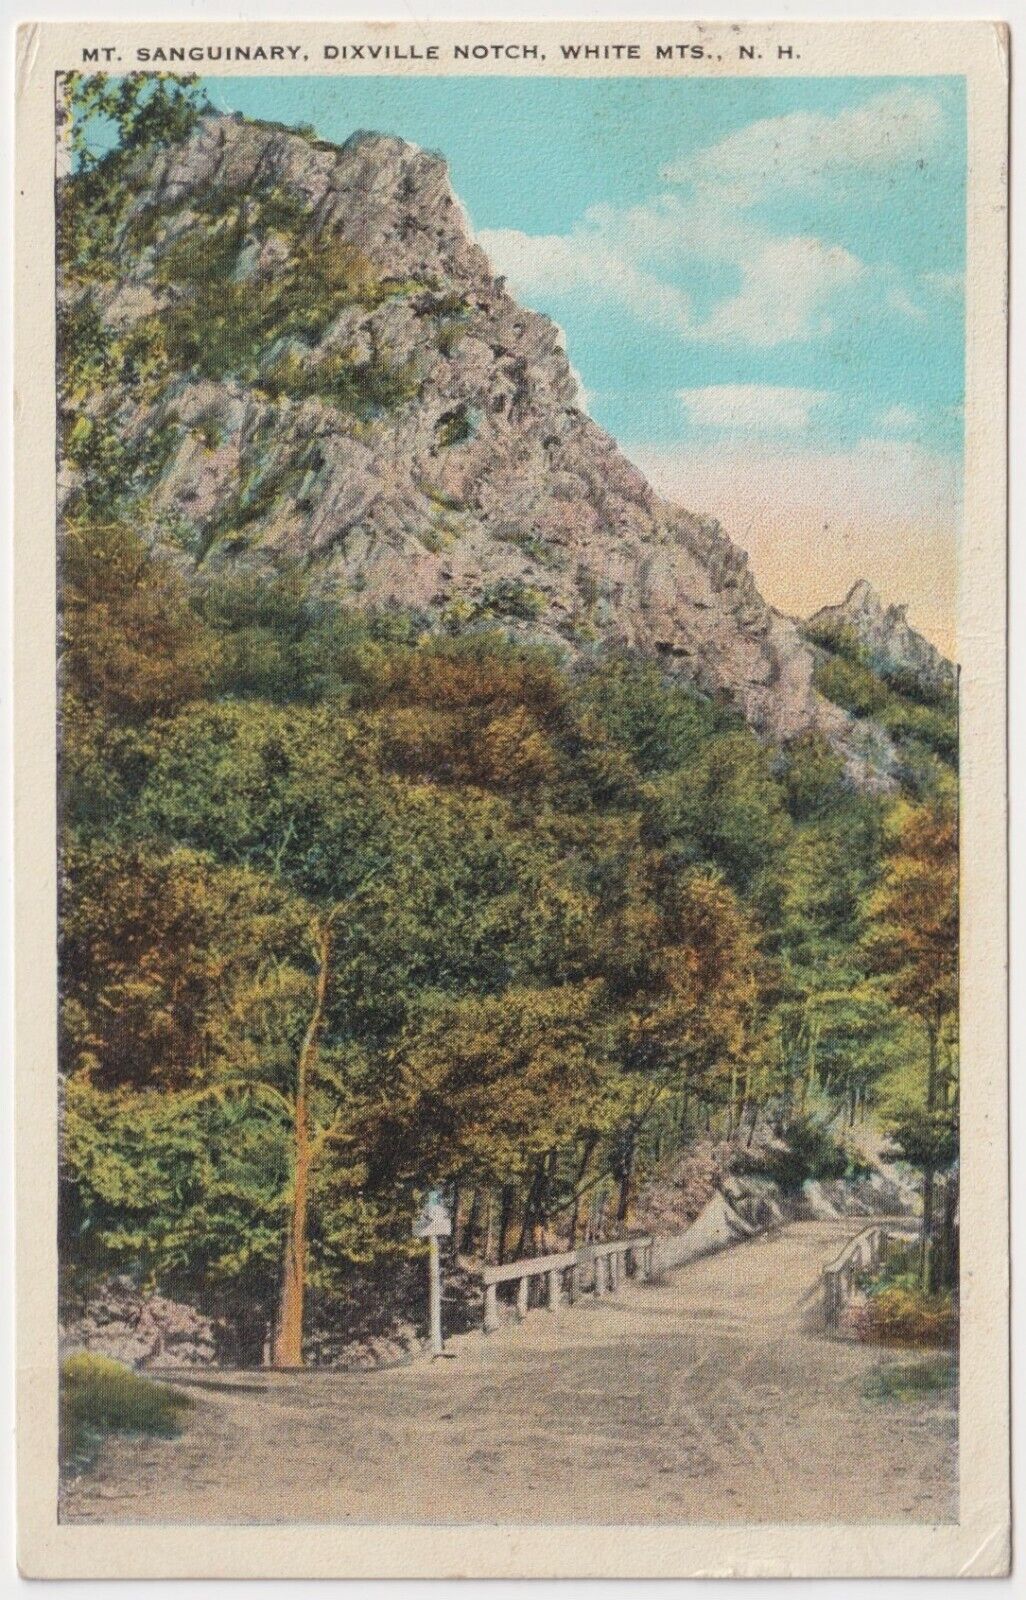 Mt. Sanguinary, Dixville Notch, White Mountains, N.H. - 1930 Vintage Postcard